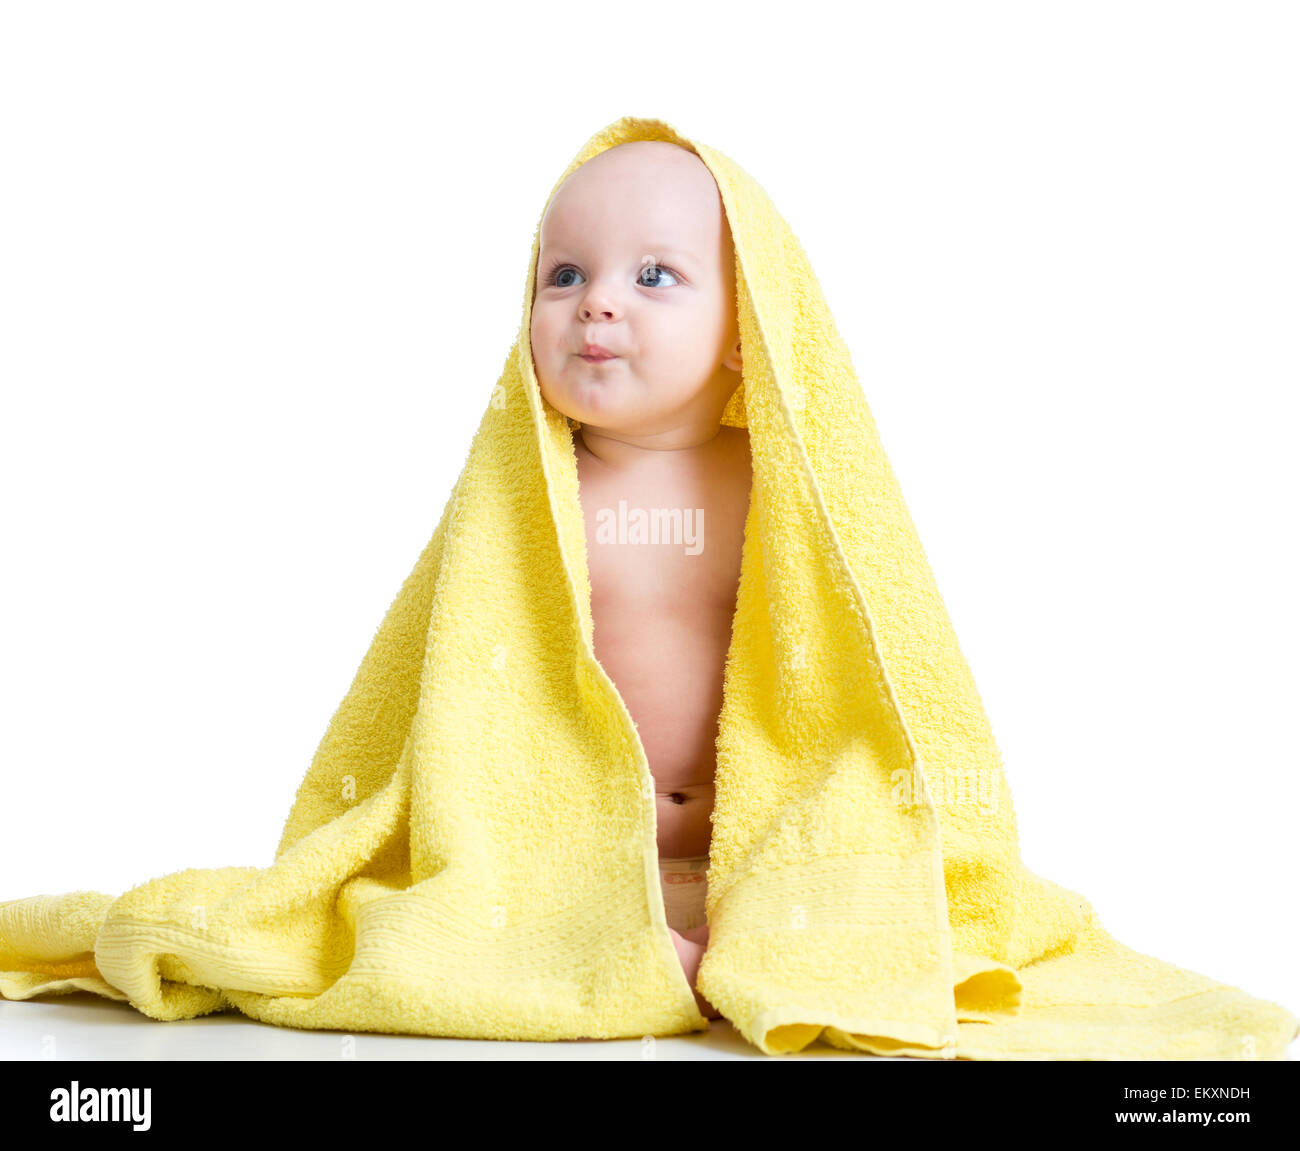 Adorable happy baby in towel Stock Photo